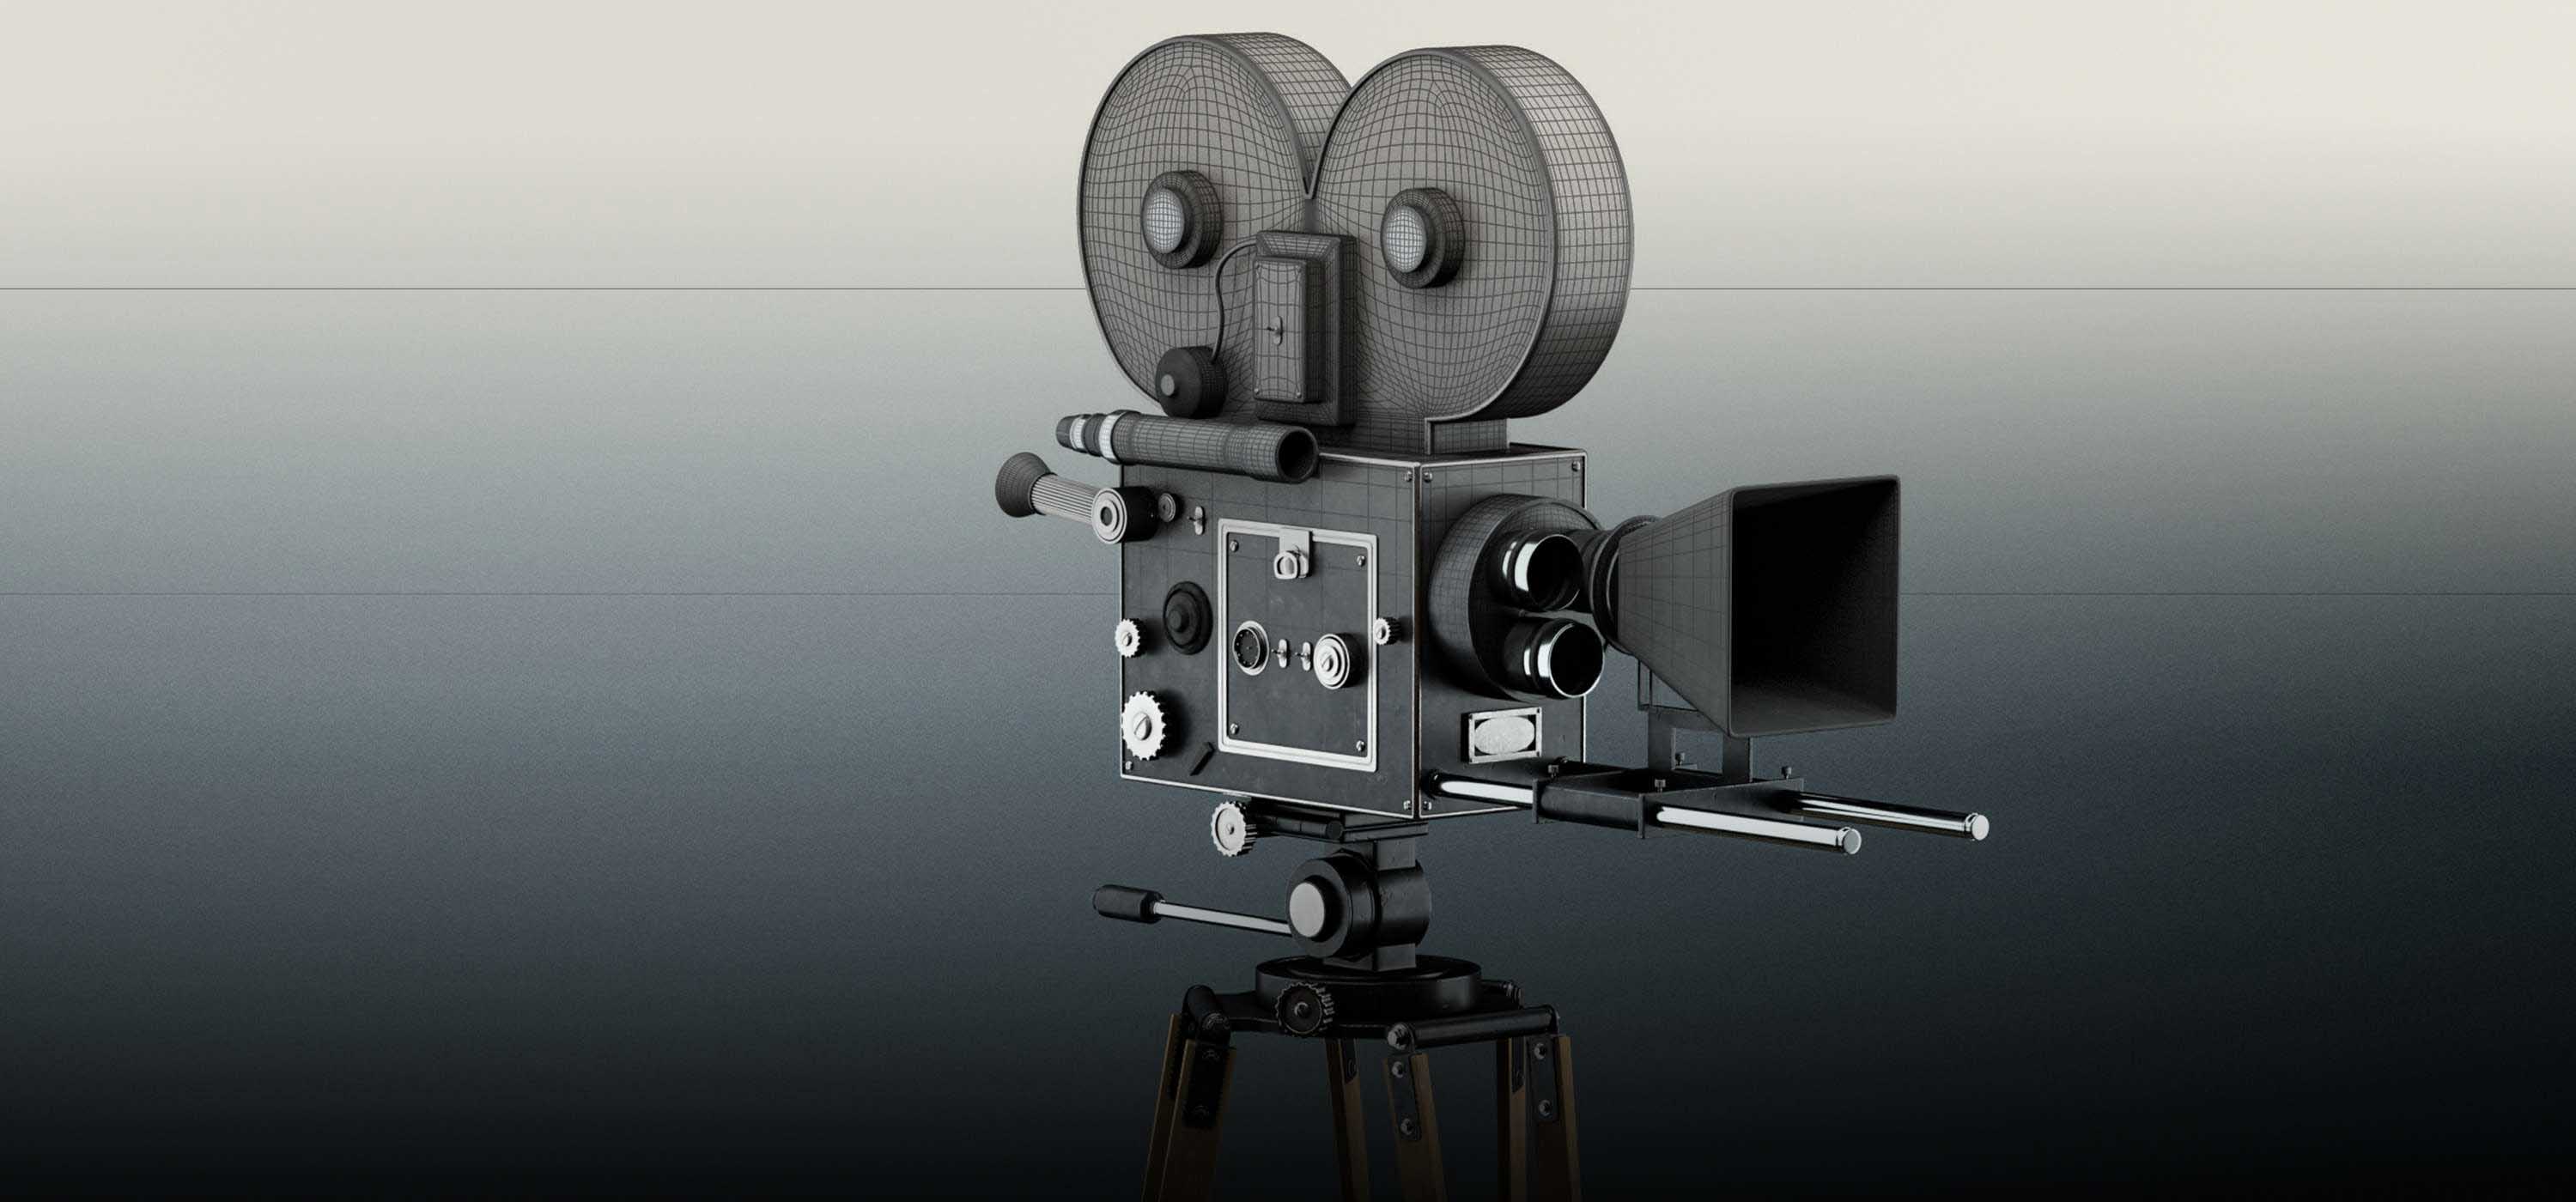 Old Fashioned Movie Camera 3D Model | C4D FBX OBJ CGI Asset PRO EDU